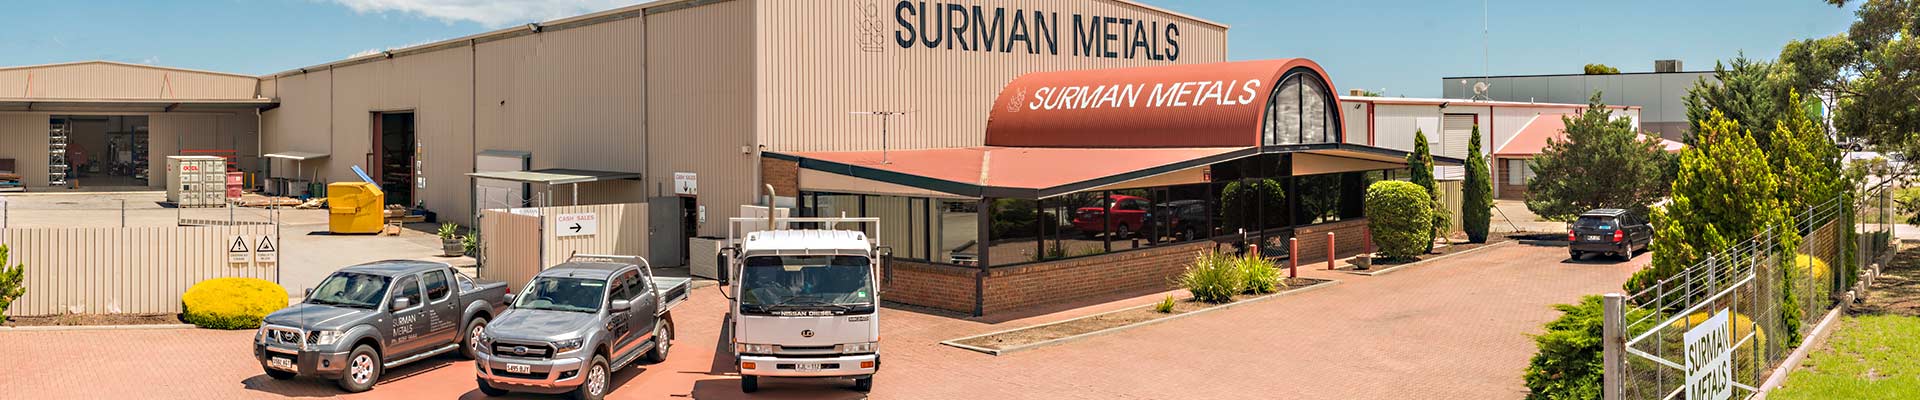 Surman Metals Adelaide suppliers